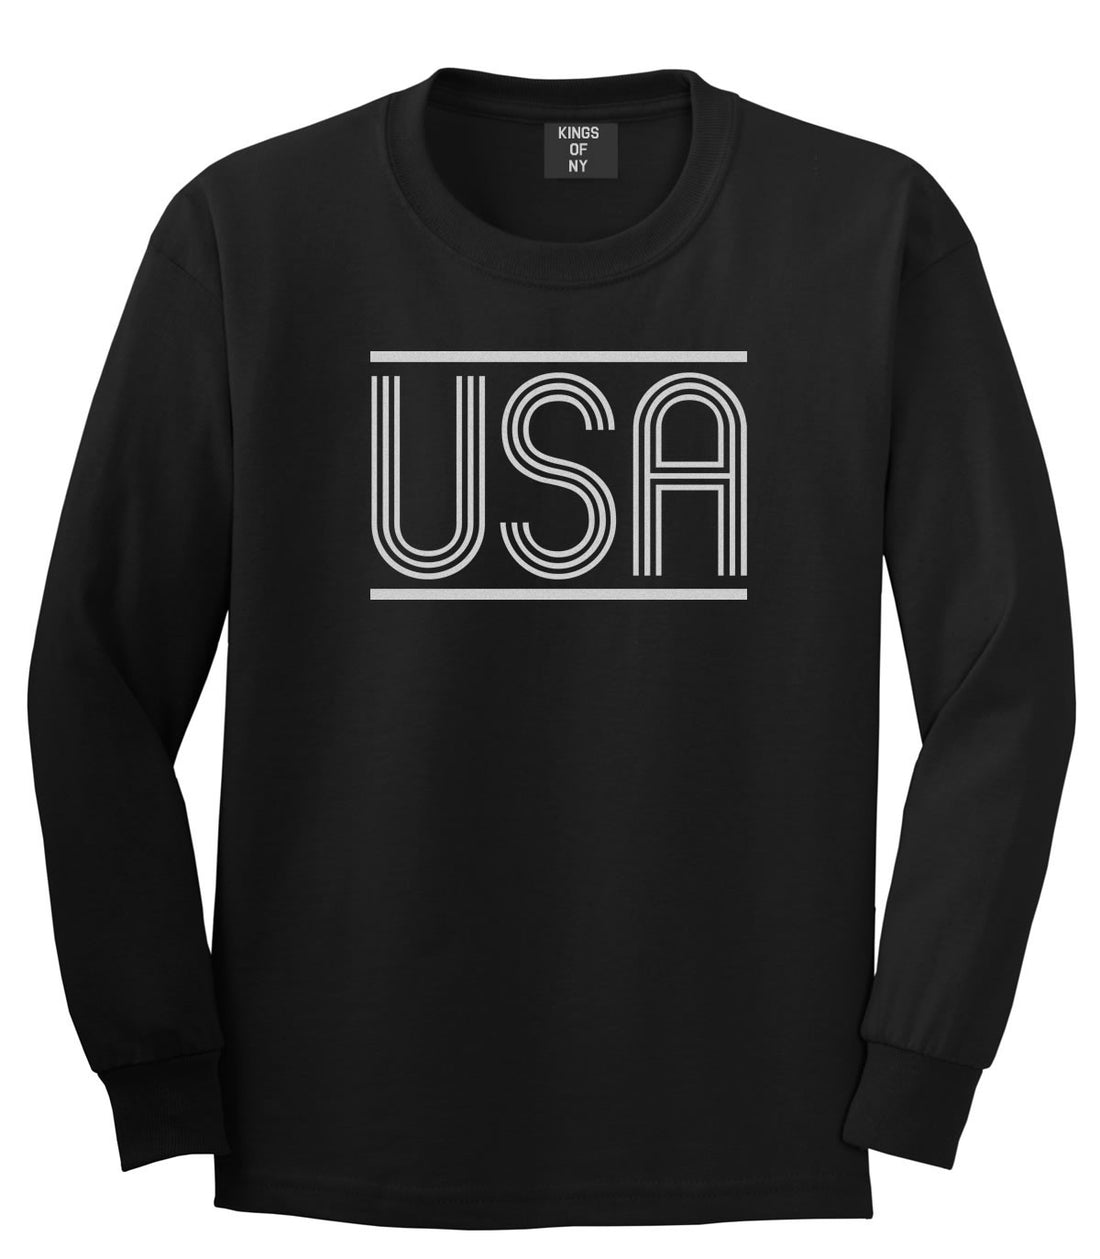 USA America Fall15 Boys Kids Long Sleeve T-Shirt in Black by Kings Of NY